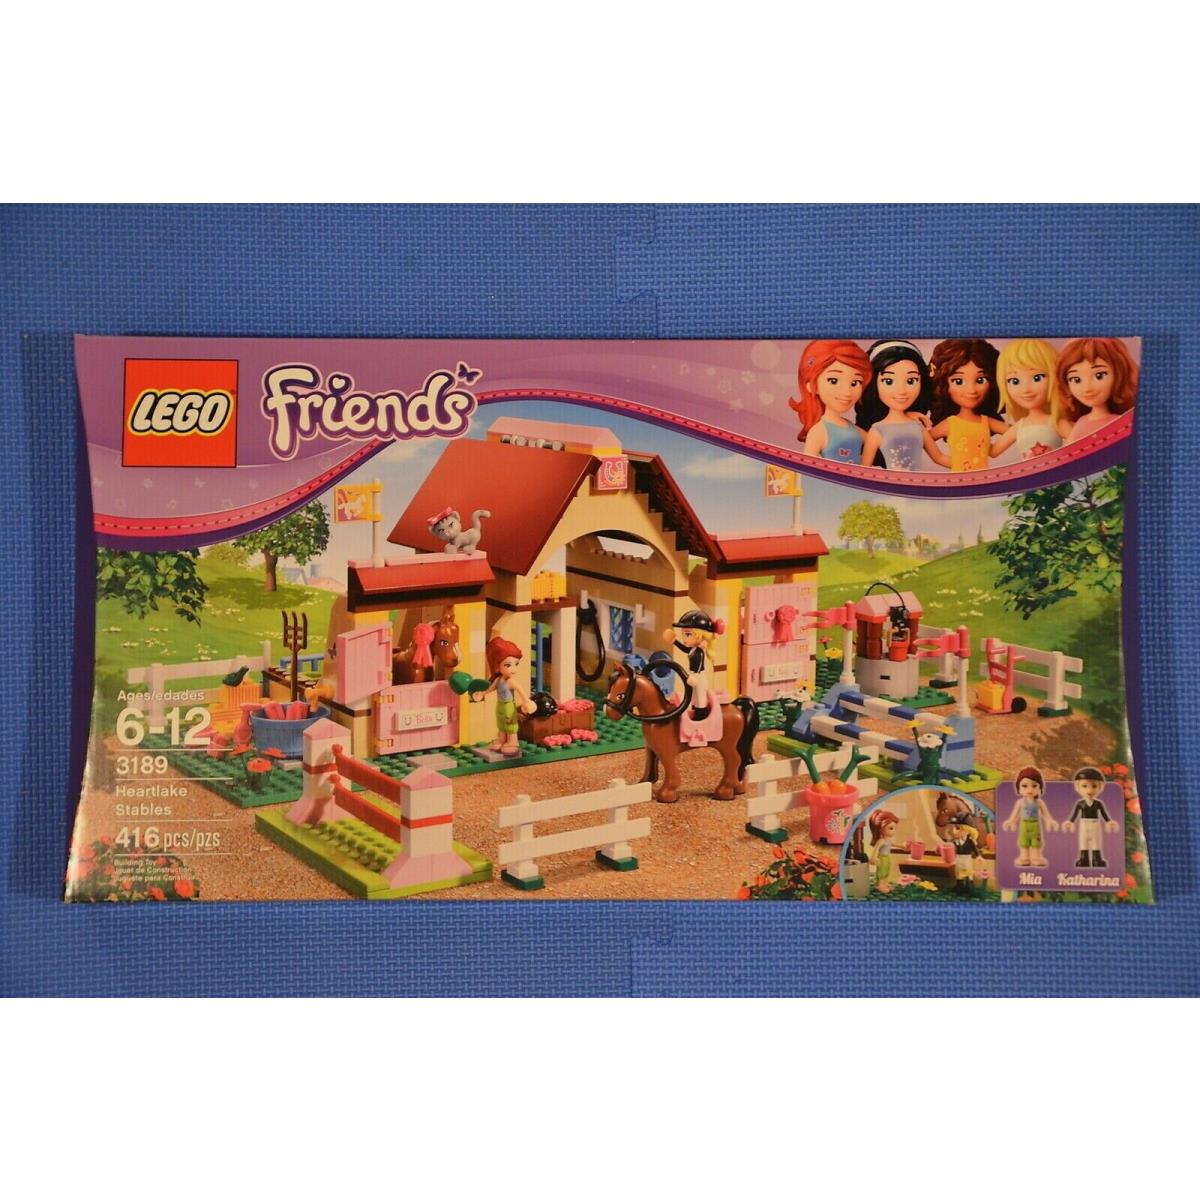 Lego 3189 Friends Heartlake Stables